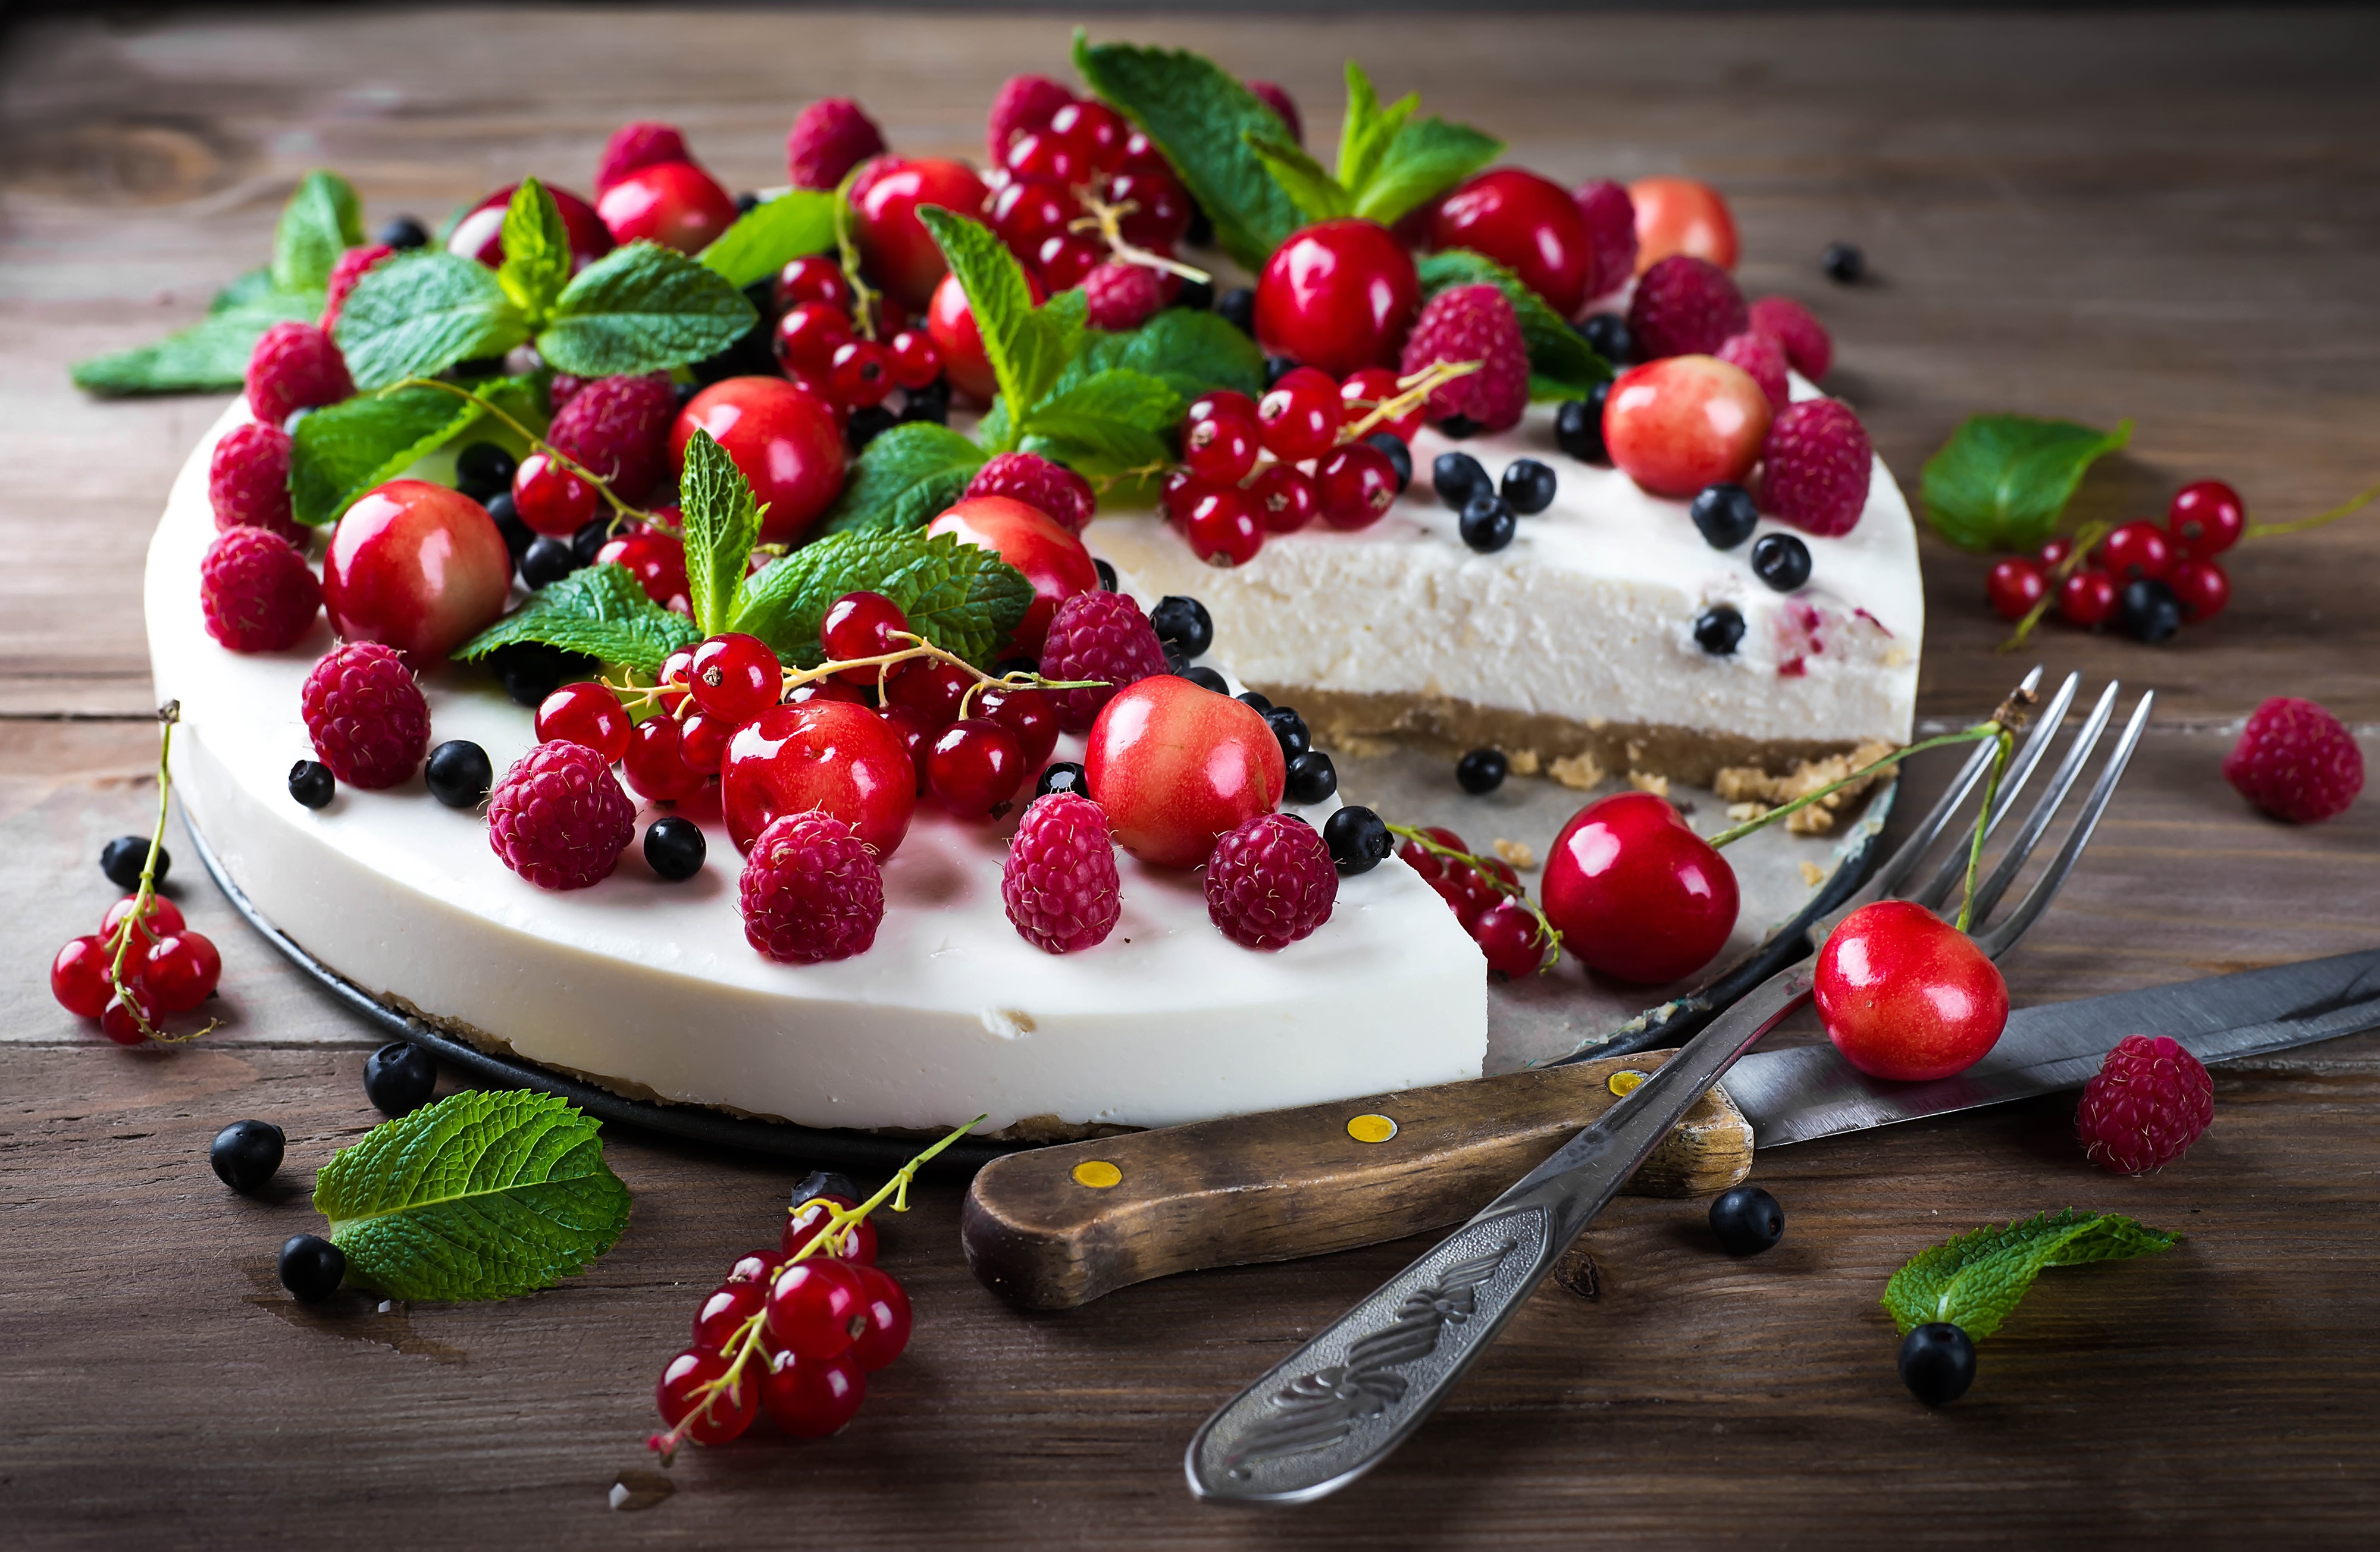 Food Sweets Cake Berries Fruit Cheesecake Cherries Raspberries Red Currant Mint Leaves Fork Knife Wo 4000x2609